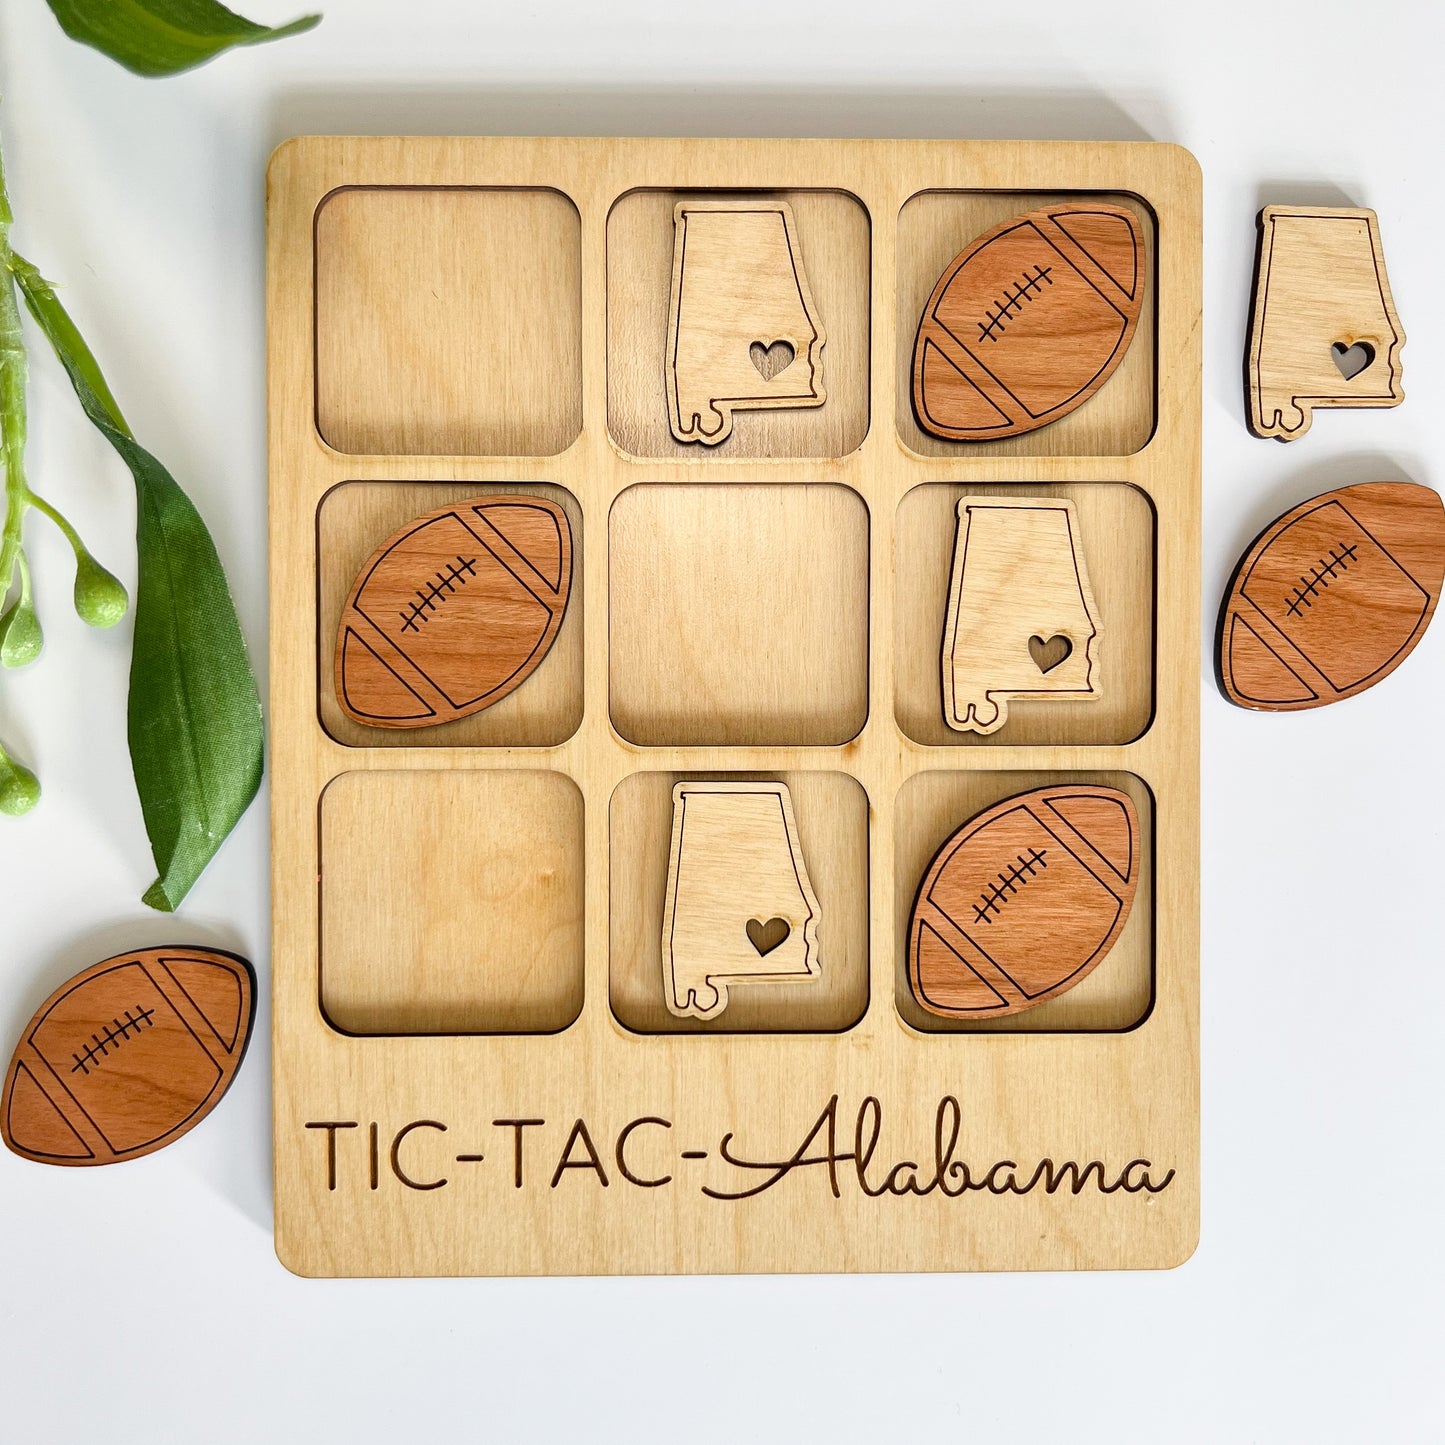 Alabama Tic-Tac-Toe Board